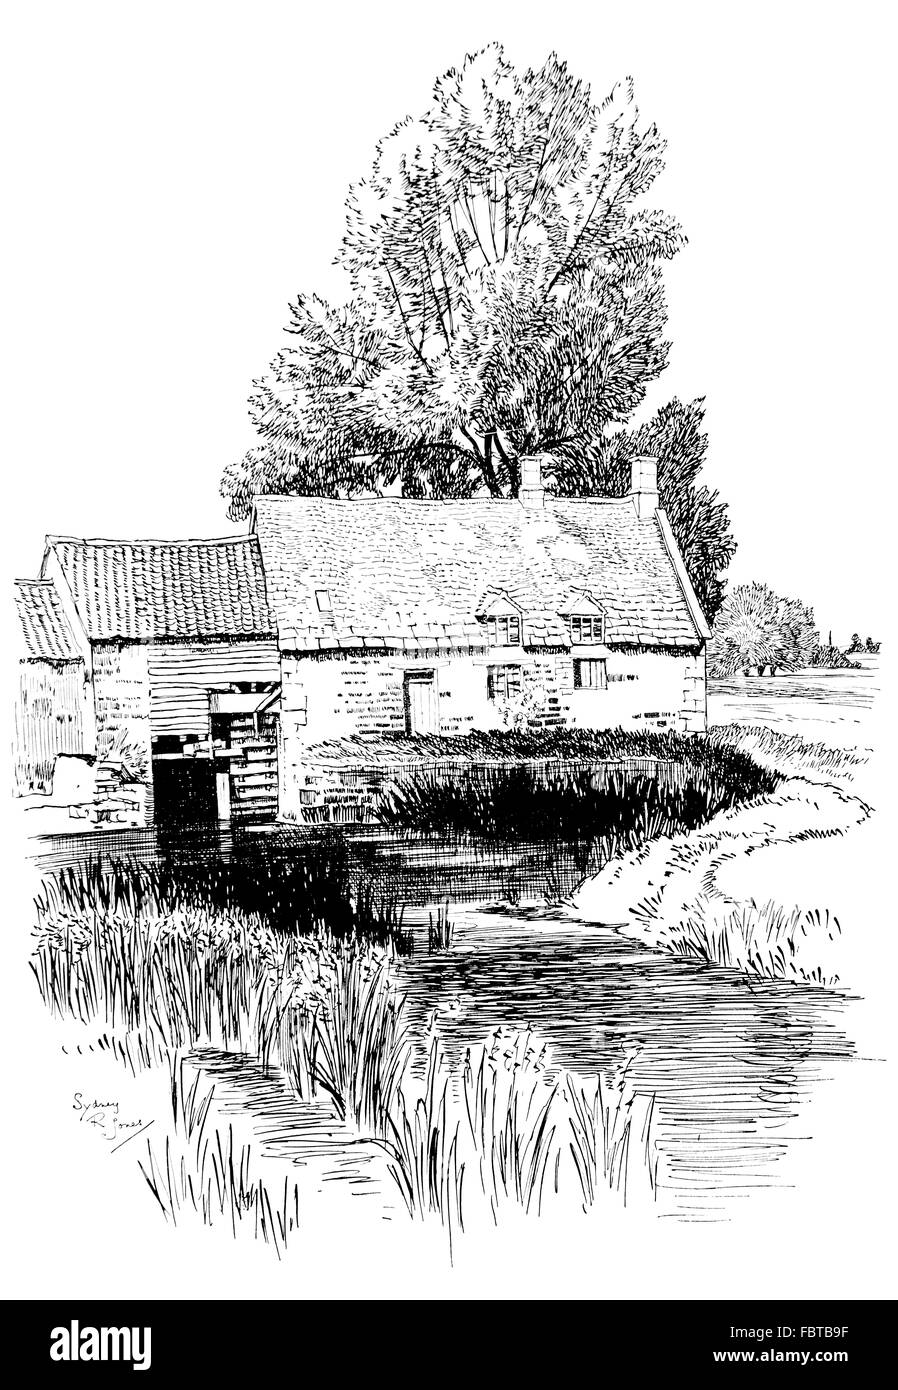 UK, England, Rutland, Lyddington, watermill in 1911, line illustration by, Sydney R Jones, from The Studio Magazine Stock Photo